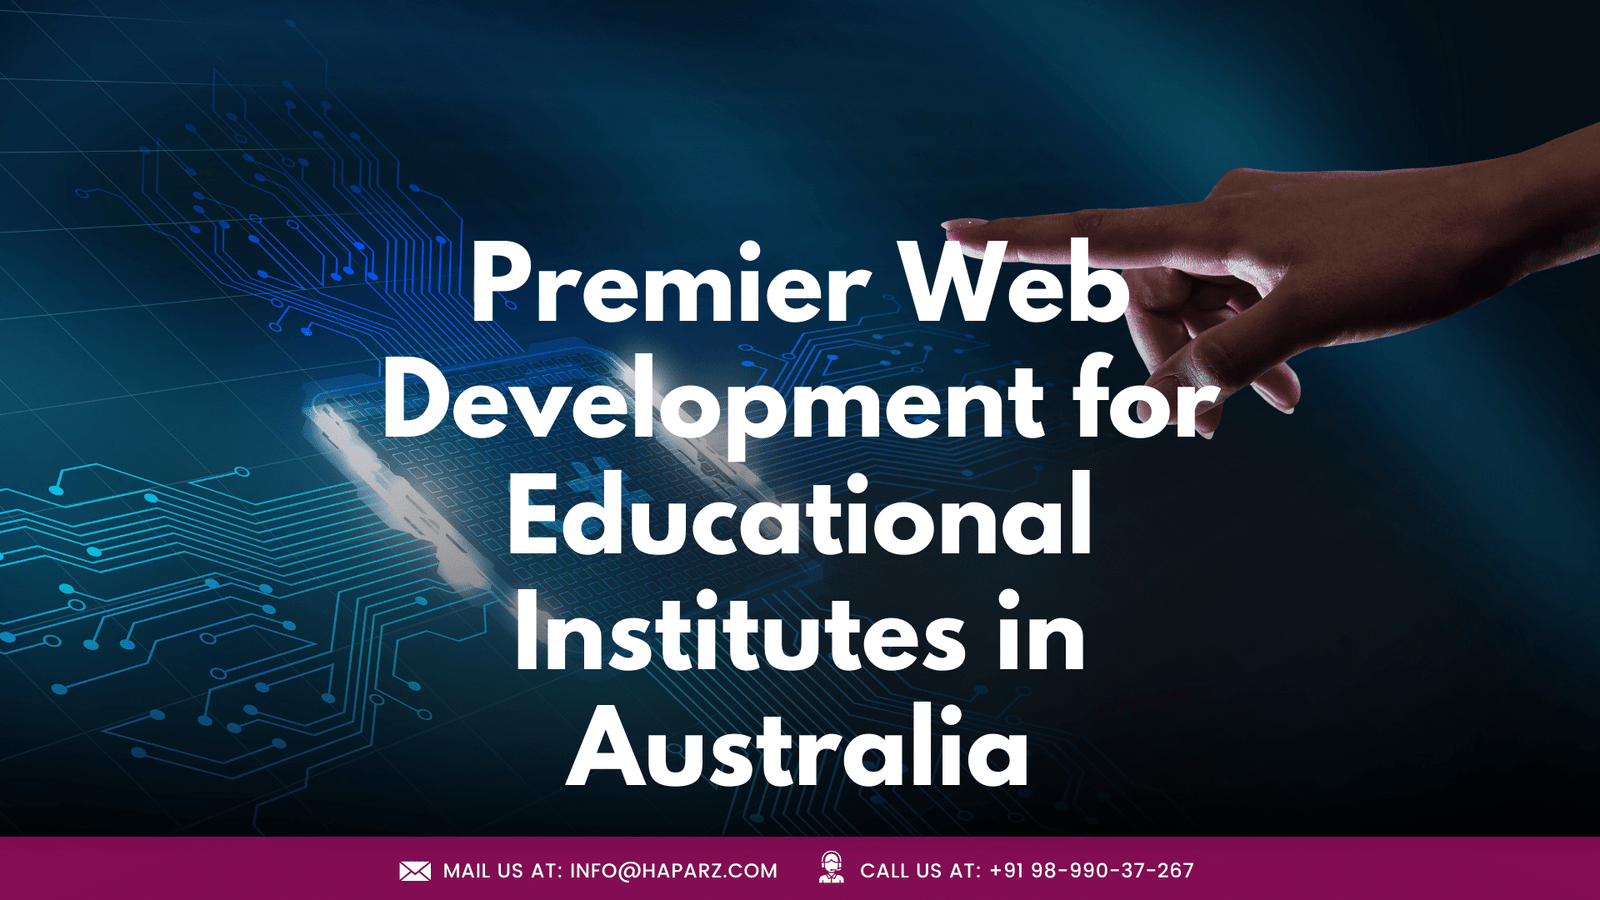 Premier Web Development for Educational Institutes in Australia